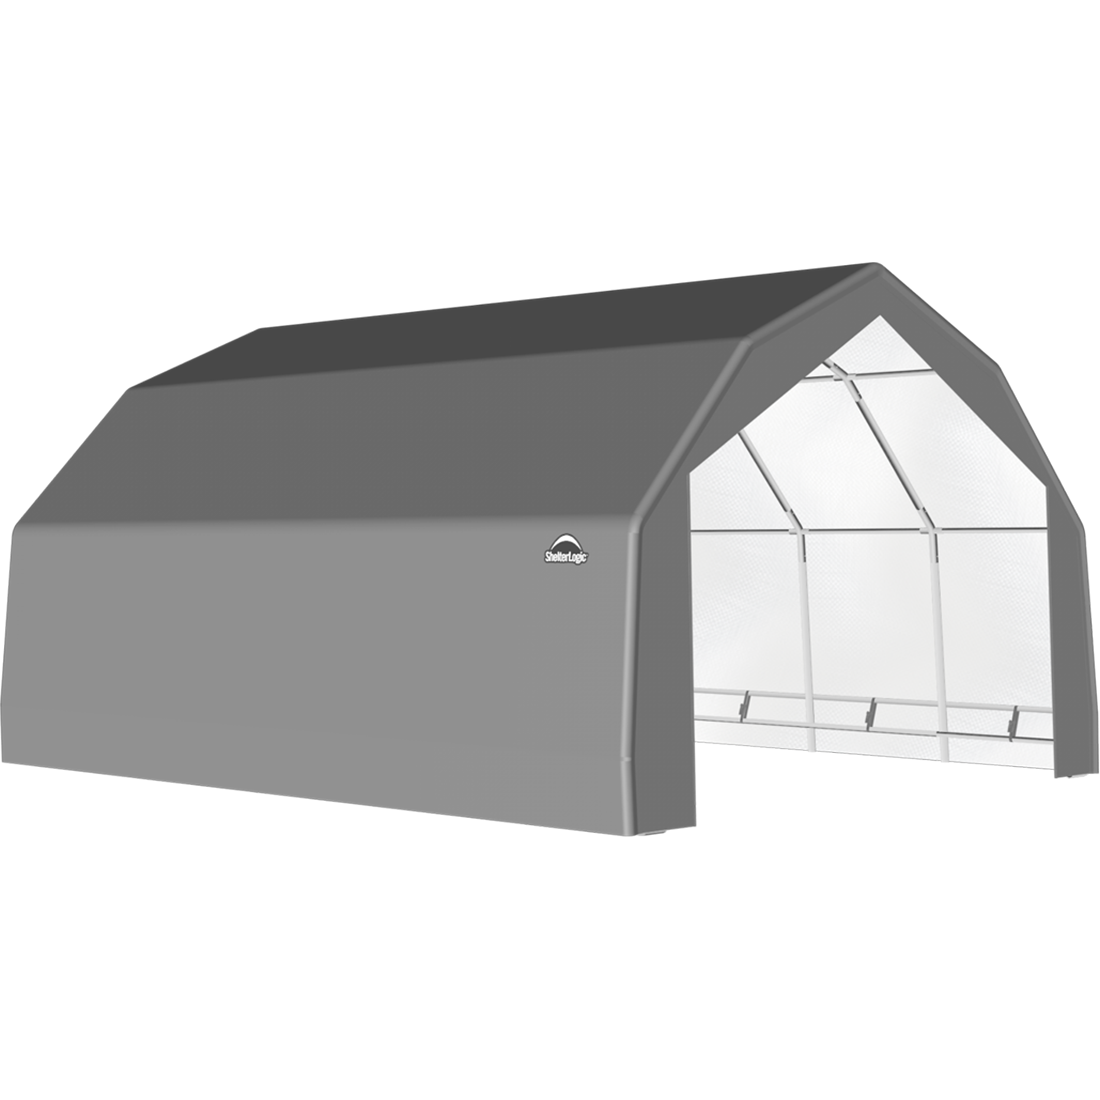 ShelterTech SP Series Barn Shelter, 20 ft. x 24 ft. x 12 ft. Heavy Duty PVC 14.5 oz. Gray